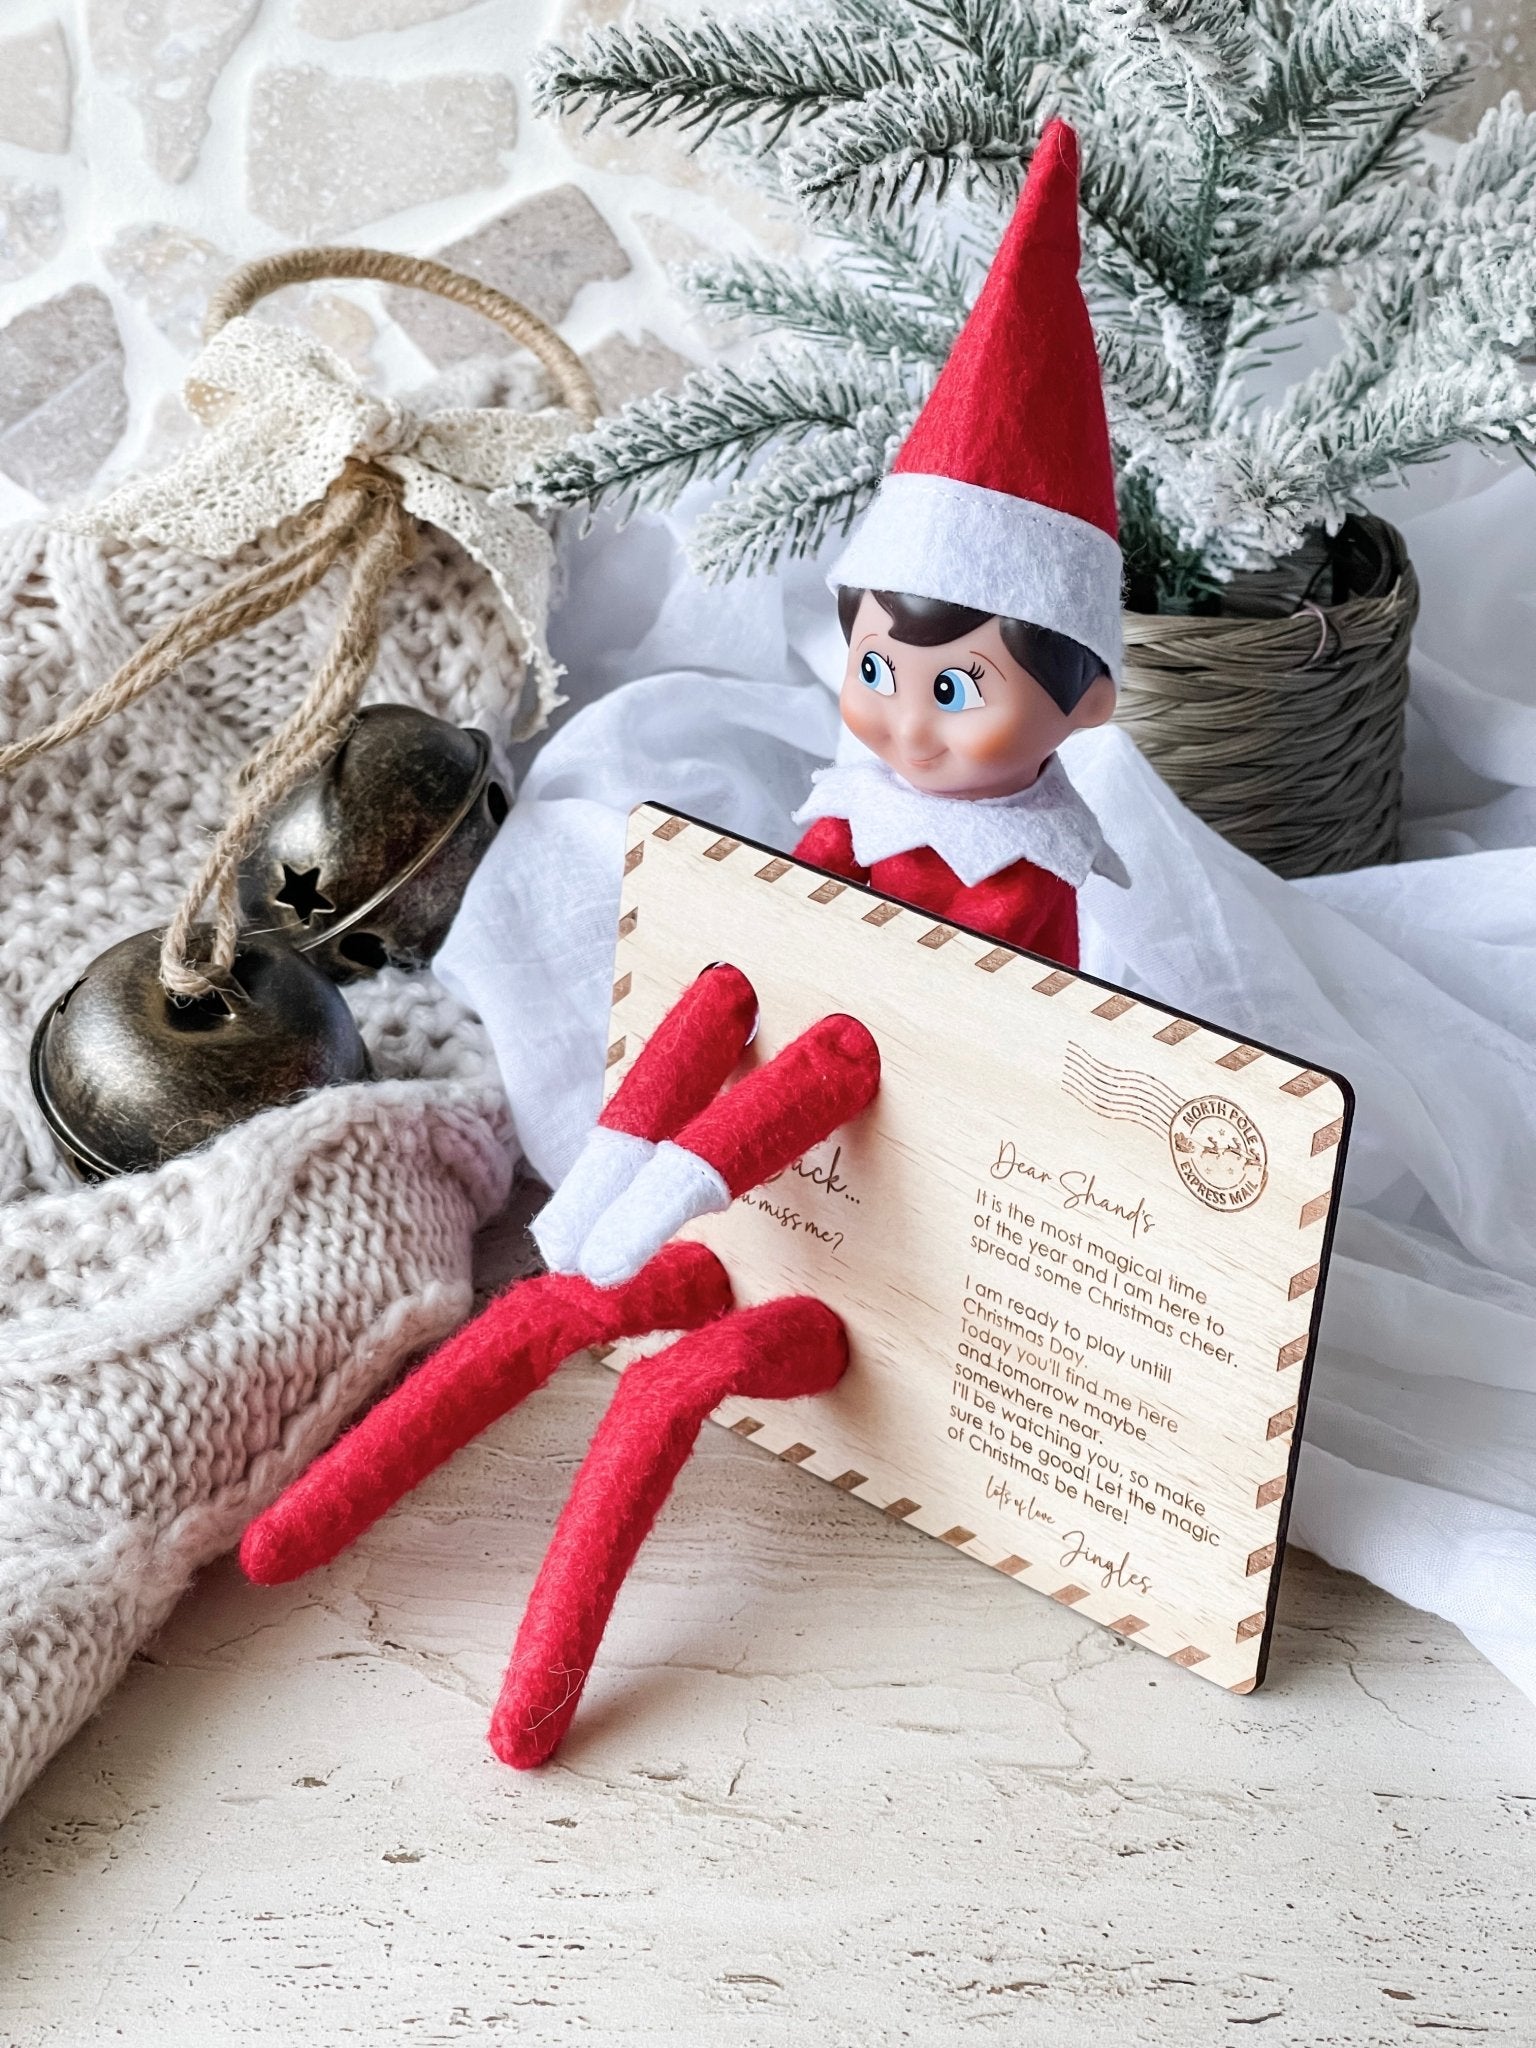 Elf on the Shelf "Nice" Postcard - The Humble Gift Co.